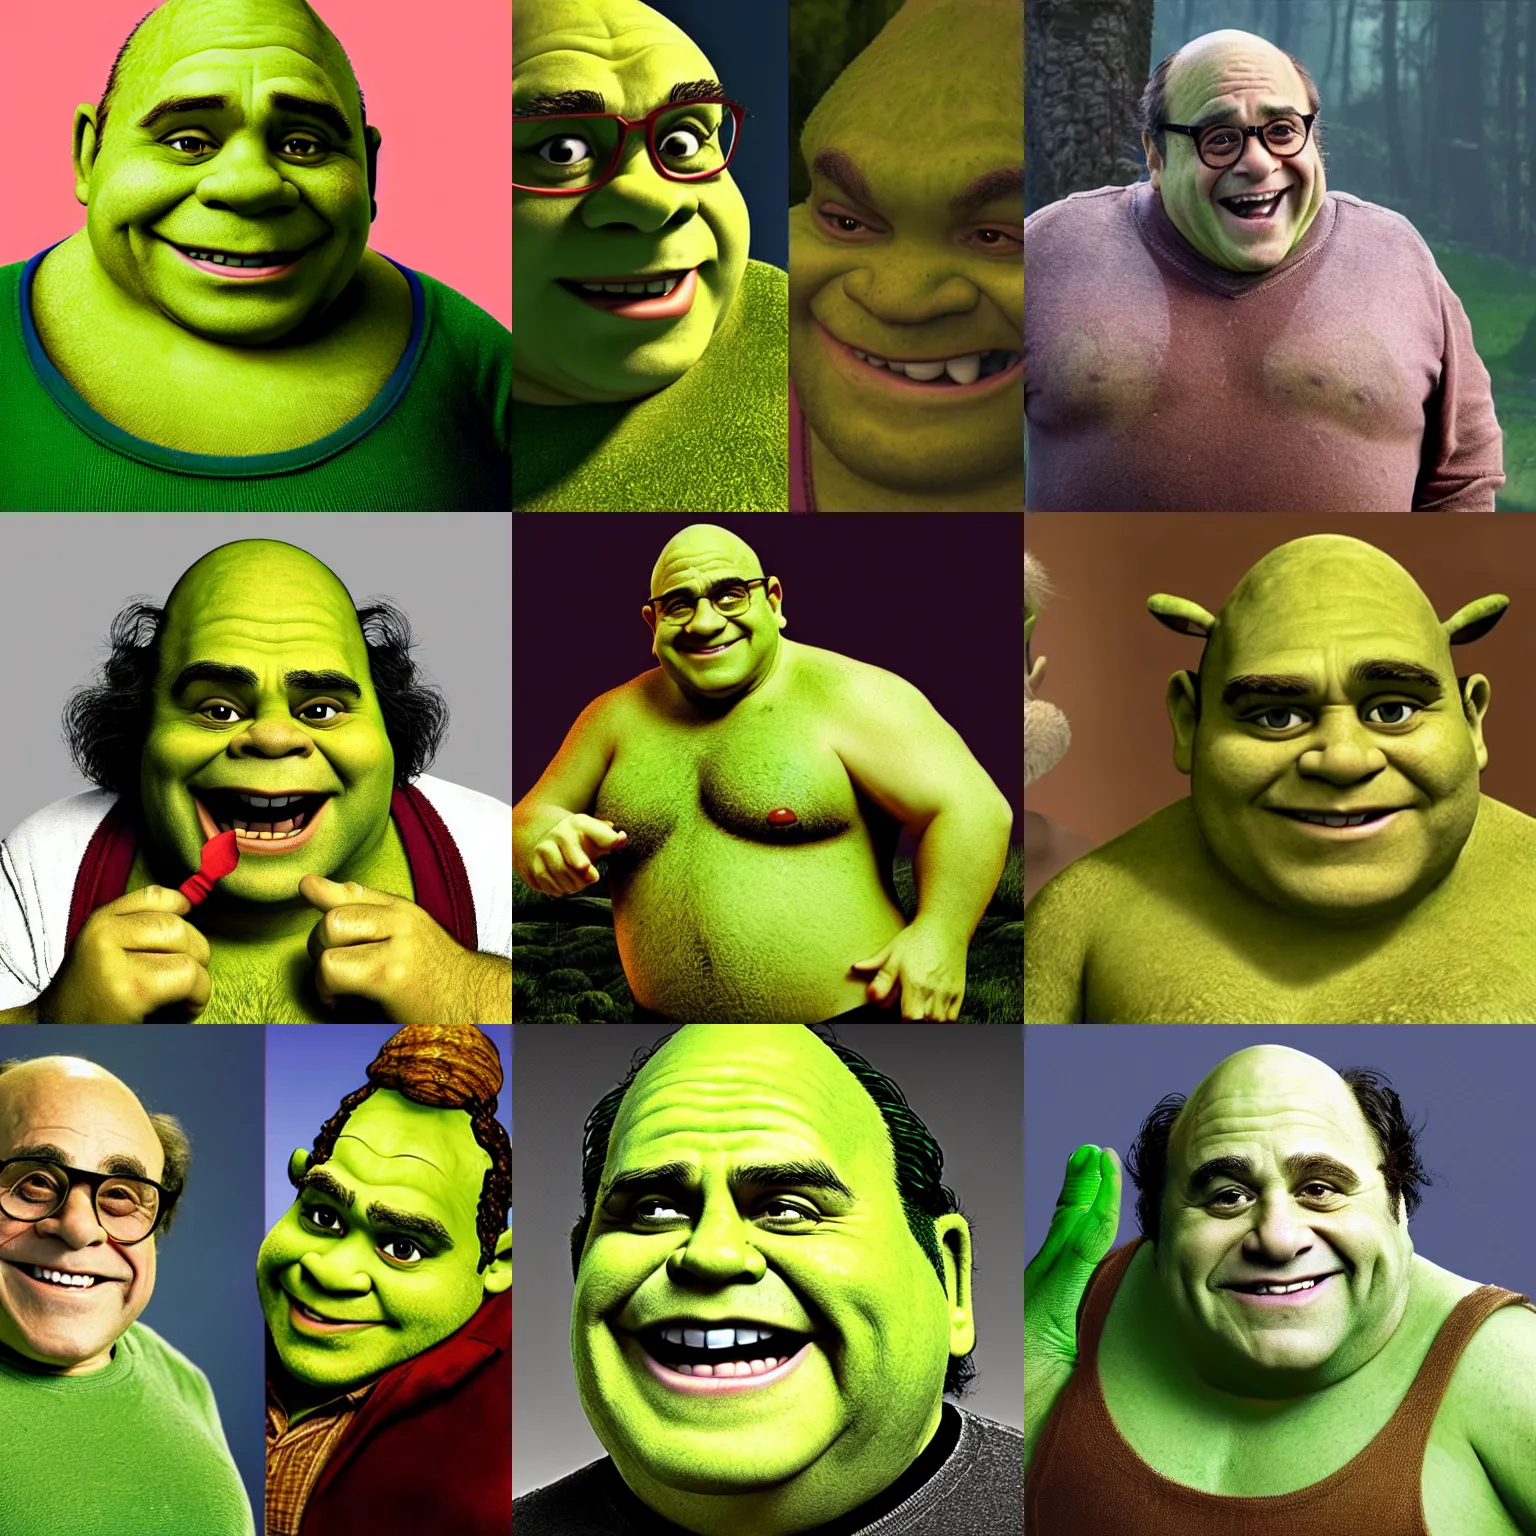 Prompt: Danny Devito as Shrek